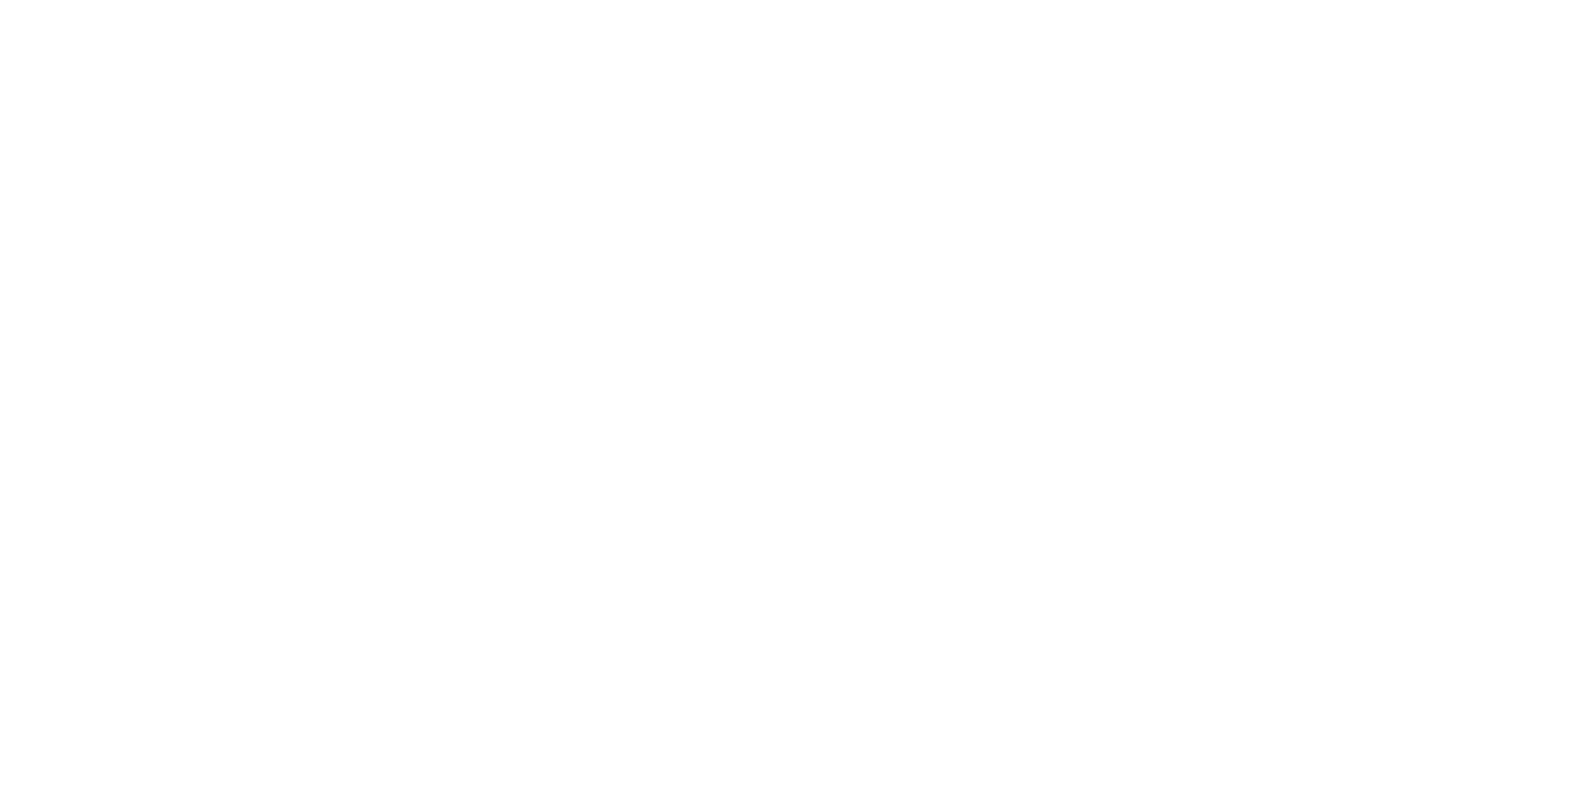 Ambarella logo large for dark backgrounds (transparent PNG)